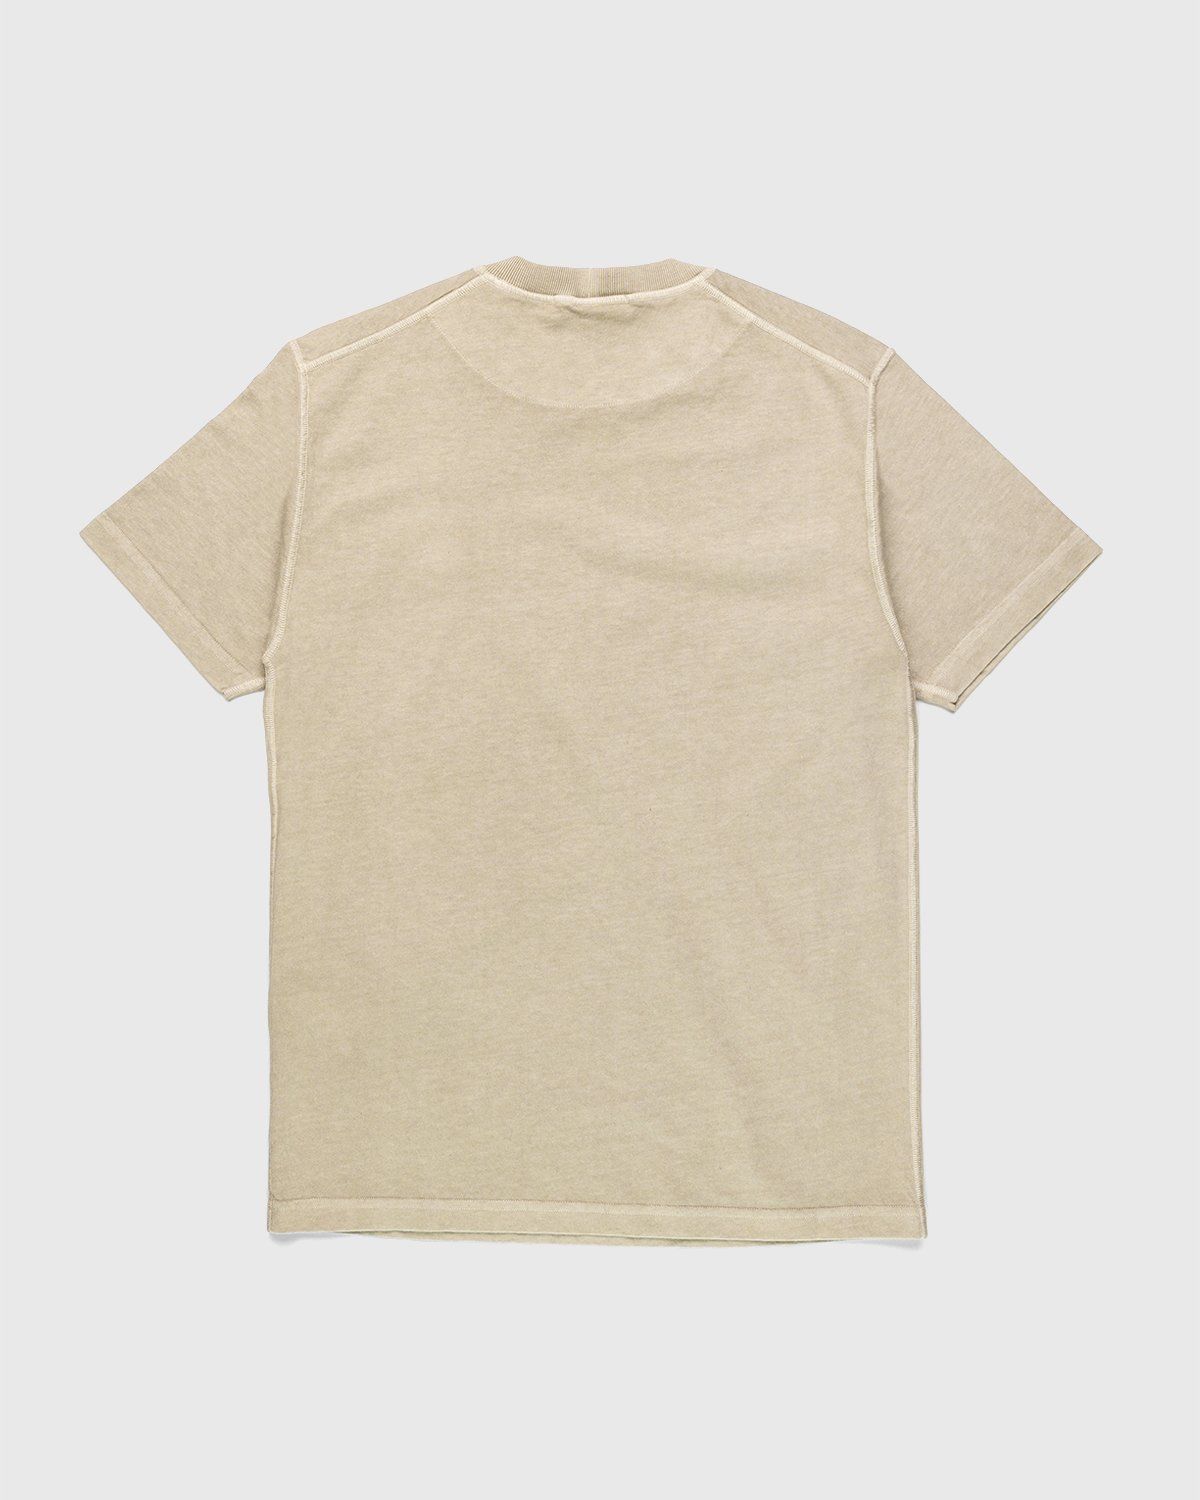 Stone Island – T-Shirt Natural Beige - Tops - Beige - Image 2